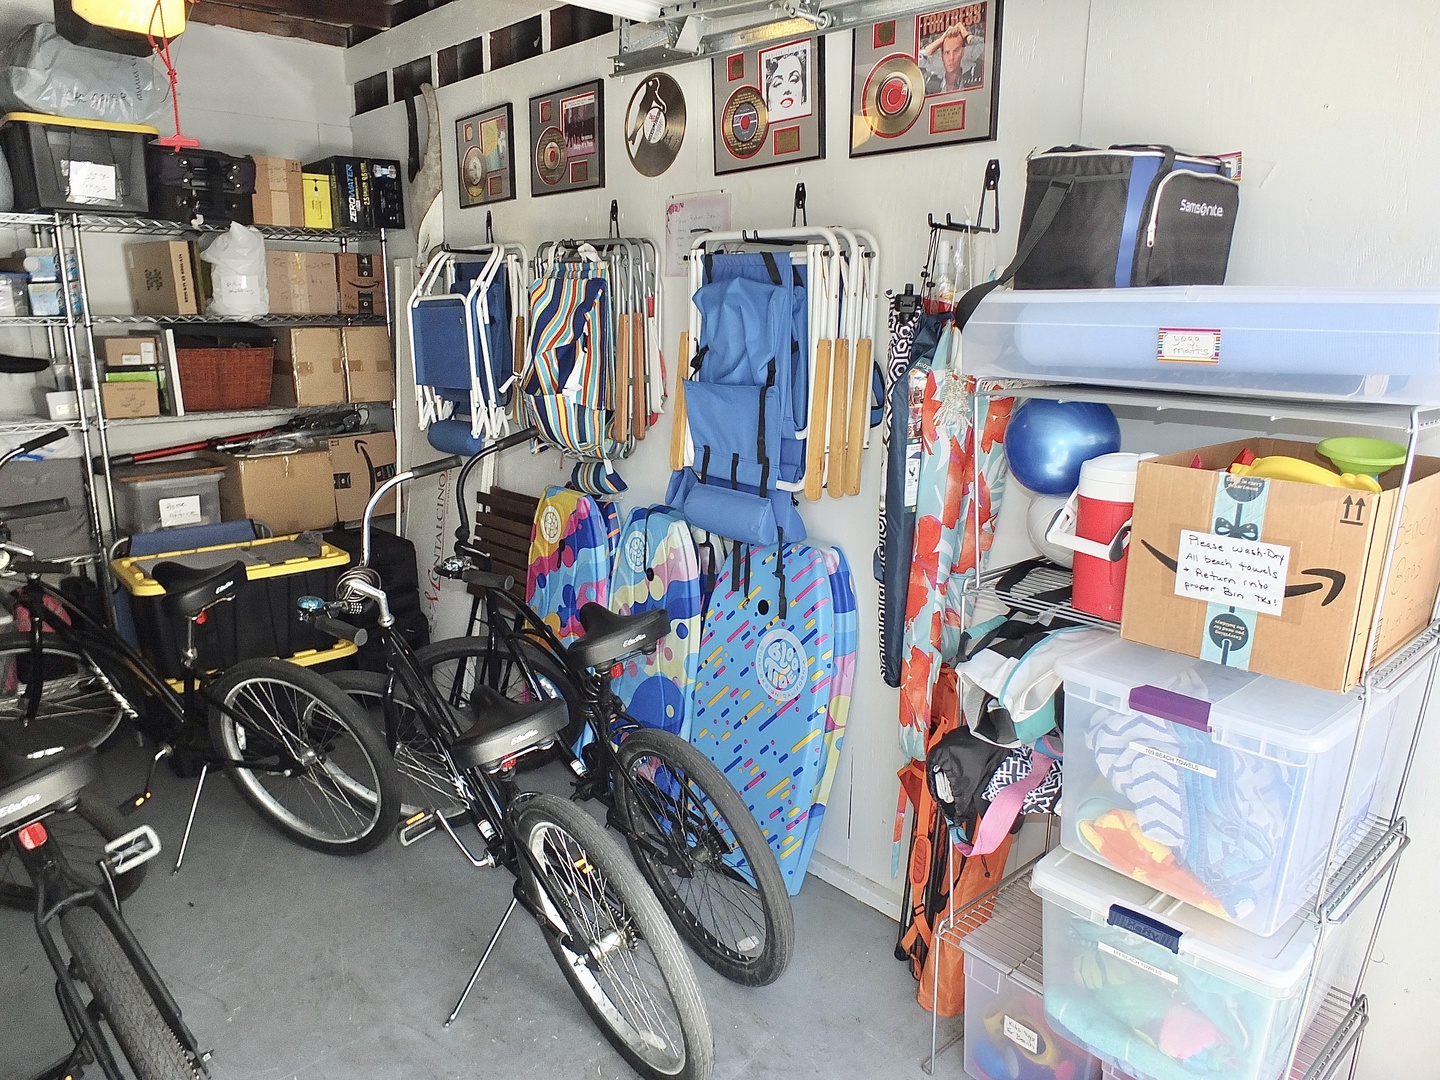 Beach Equipment stored in Garage (Bikes, Towels, Umbrellas, Chairs)